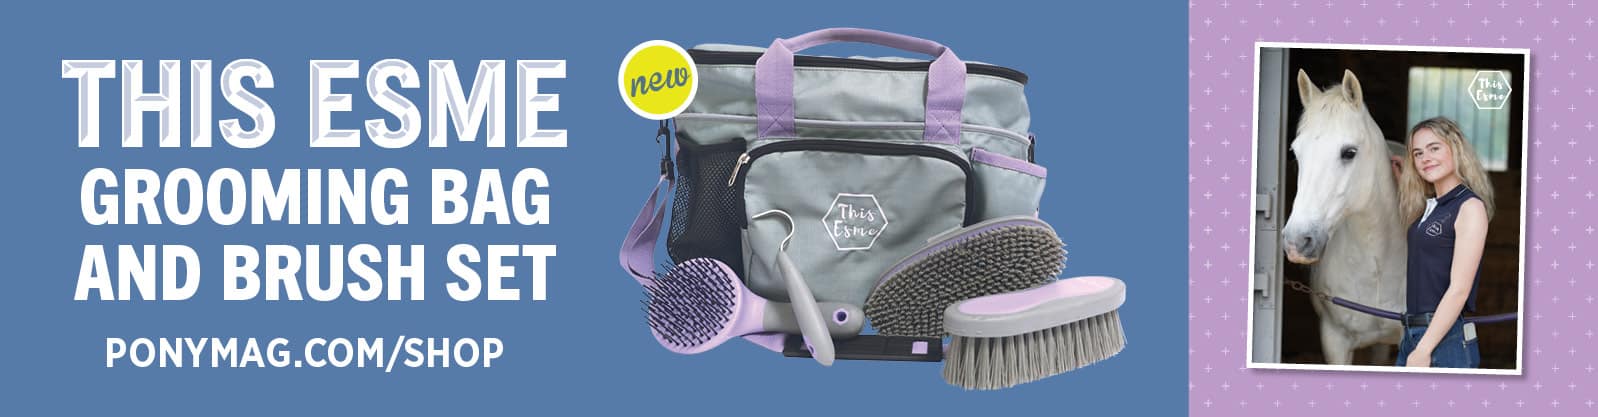 This Esme grooming bag and brush set